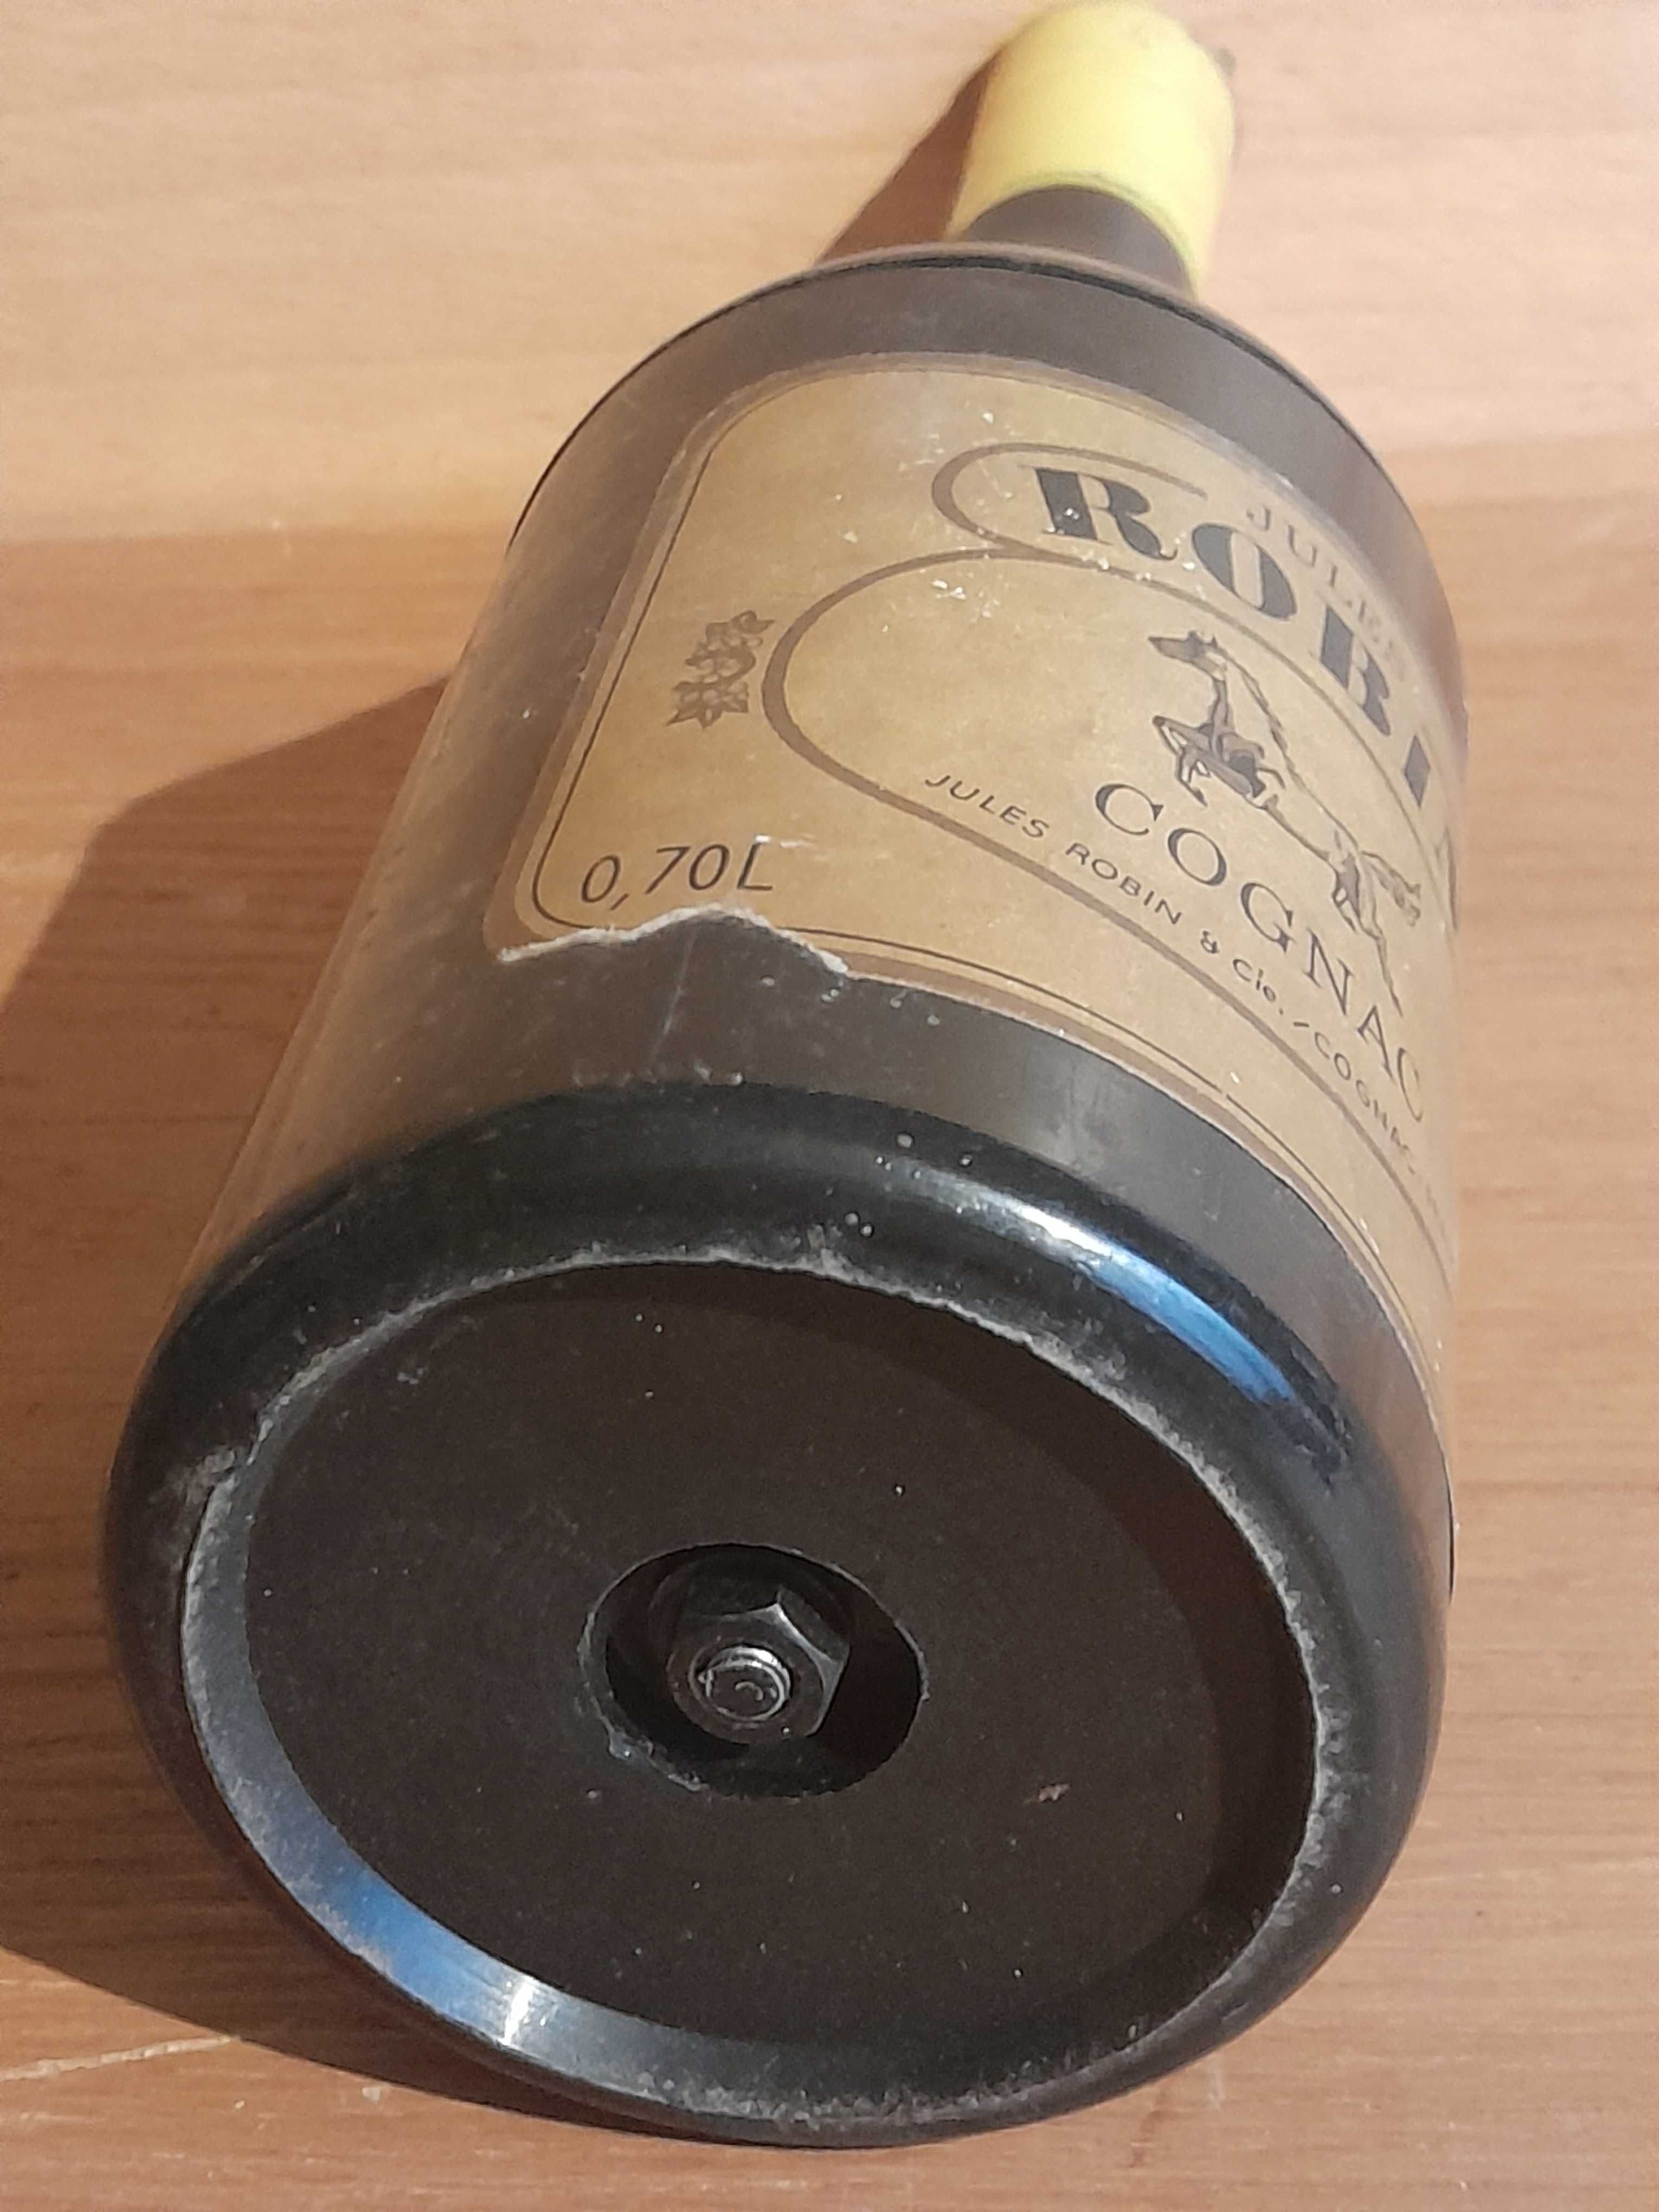 Stara papierośnica Robin butelka Cognac gadżet zabytek PRL retro